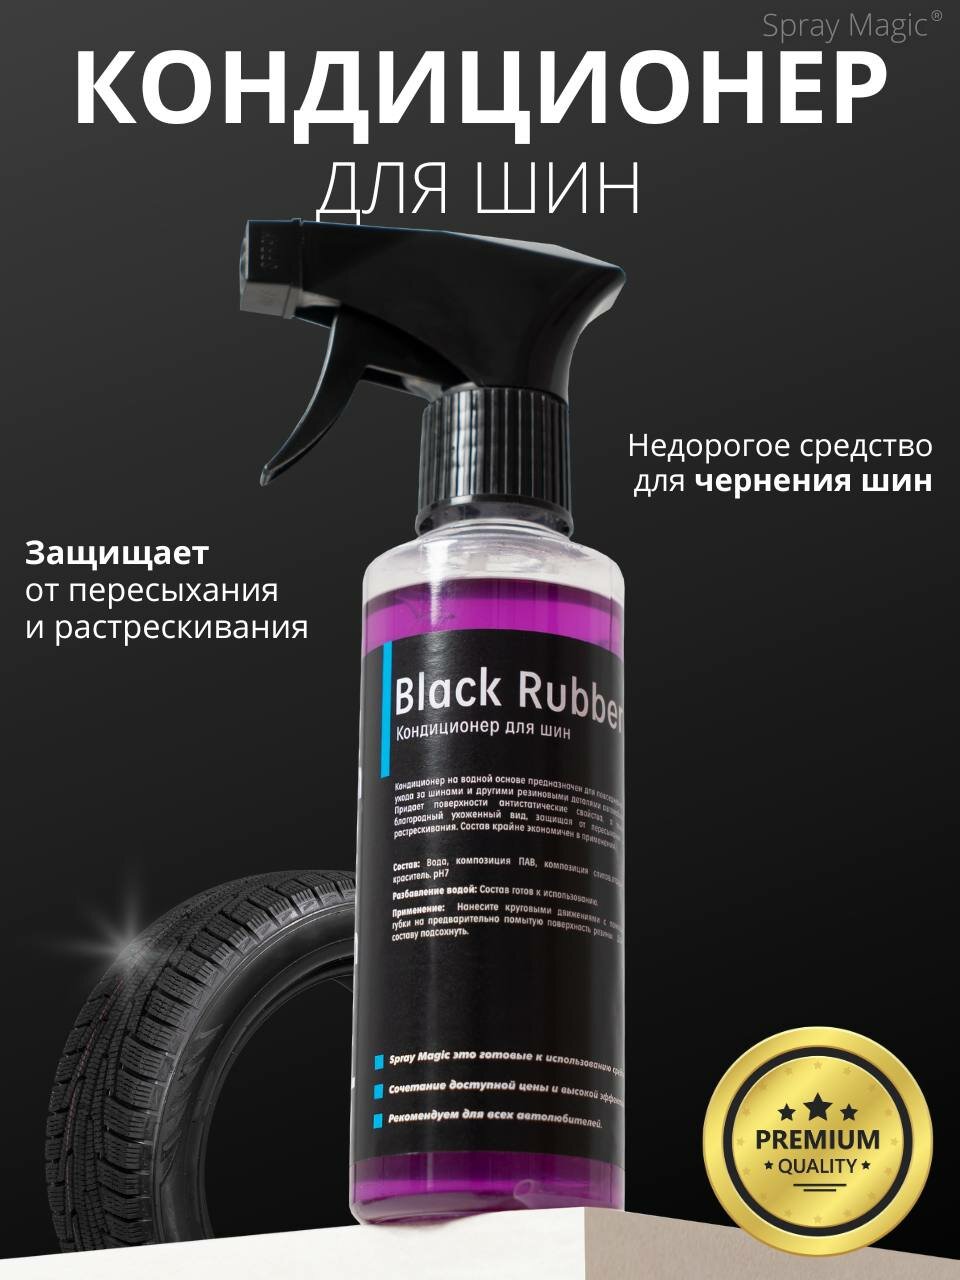 Spray Magic Black Rubber - кондиционер для шин 250мл